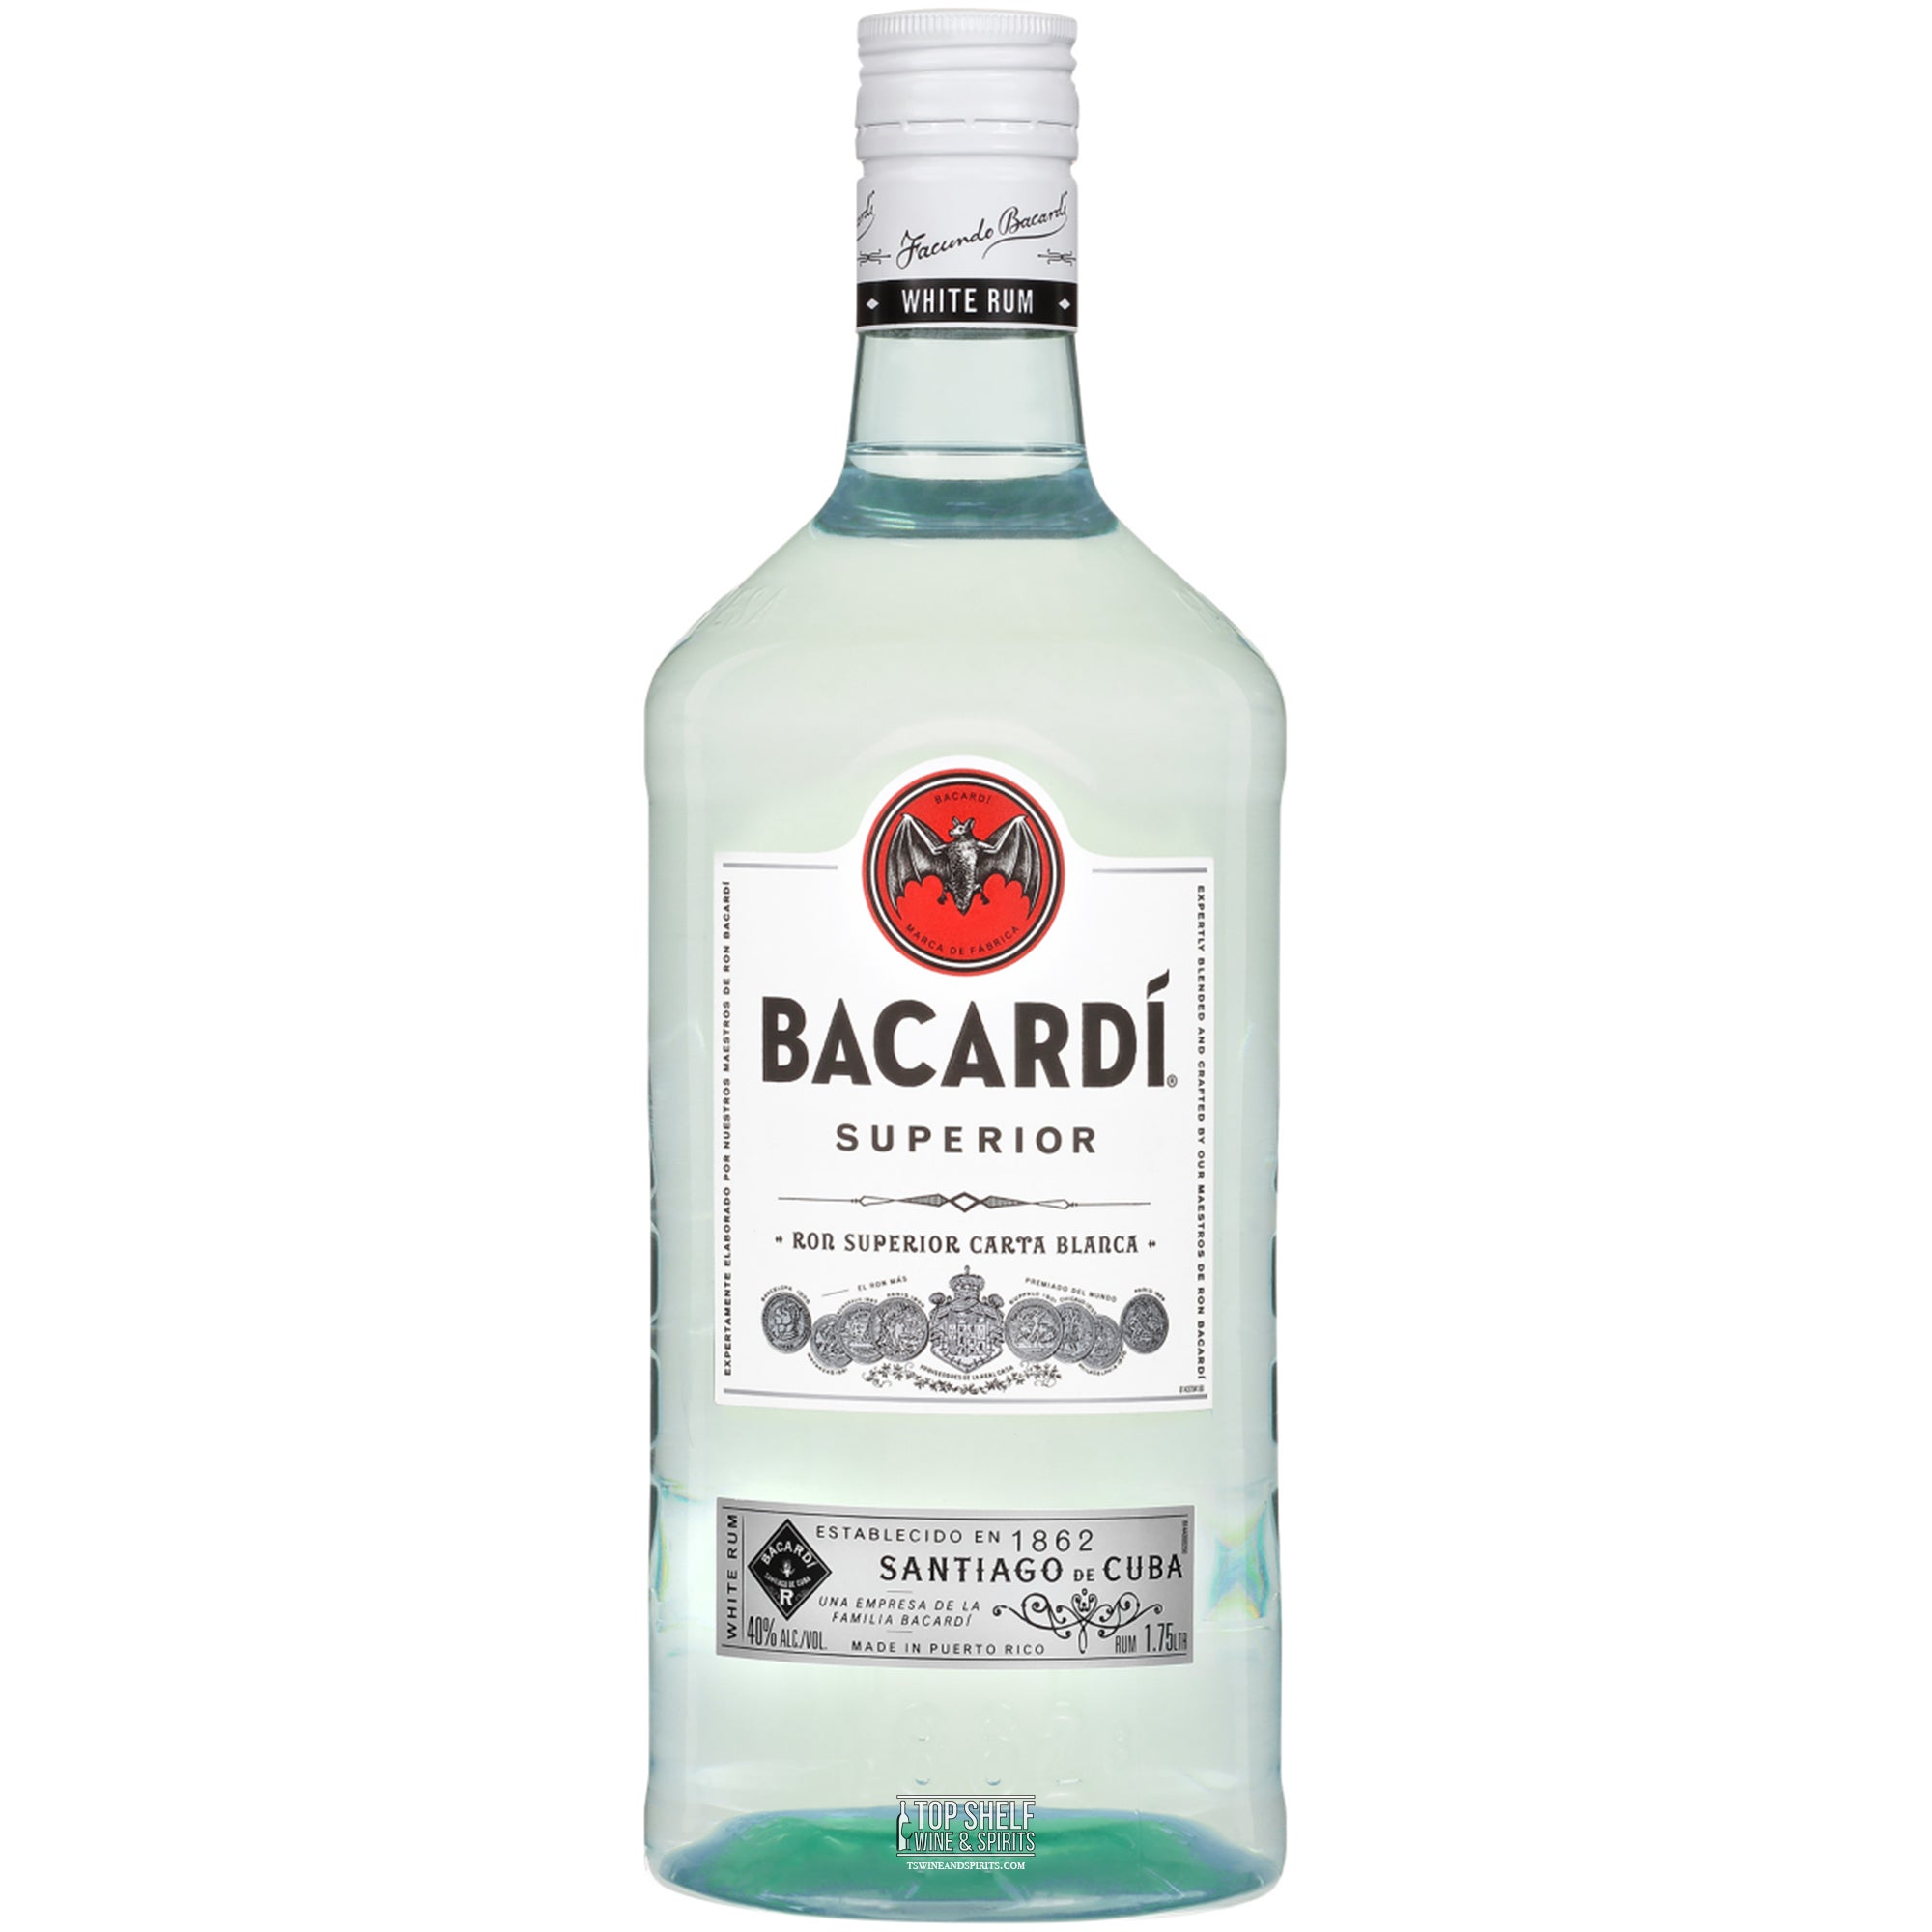 Bacardí Superior rum 1.75L